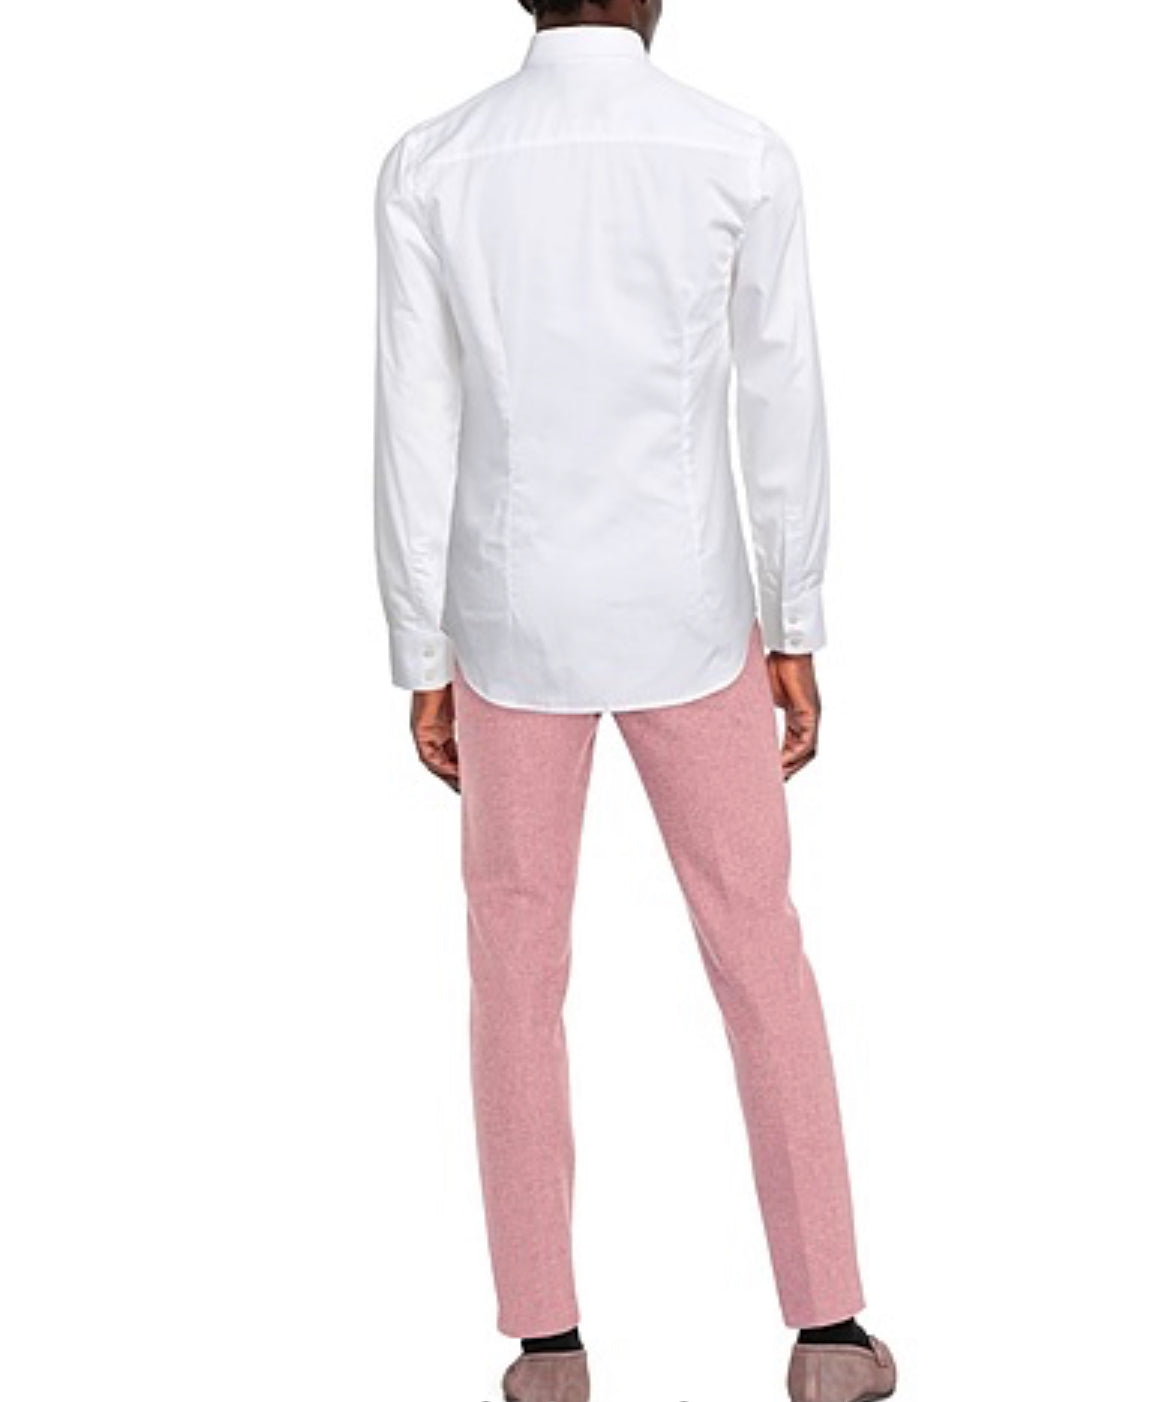 White Long-Sleeve Shirt